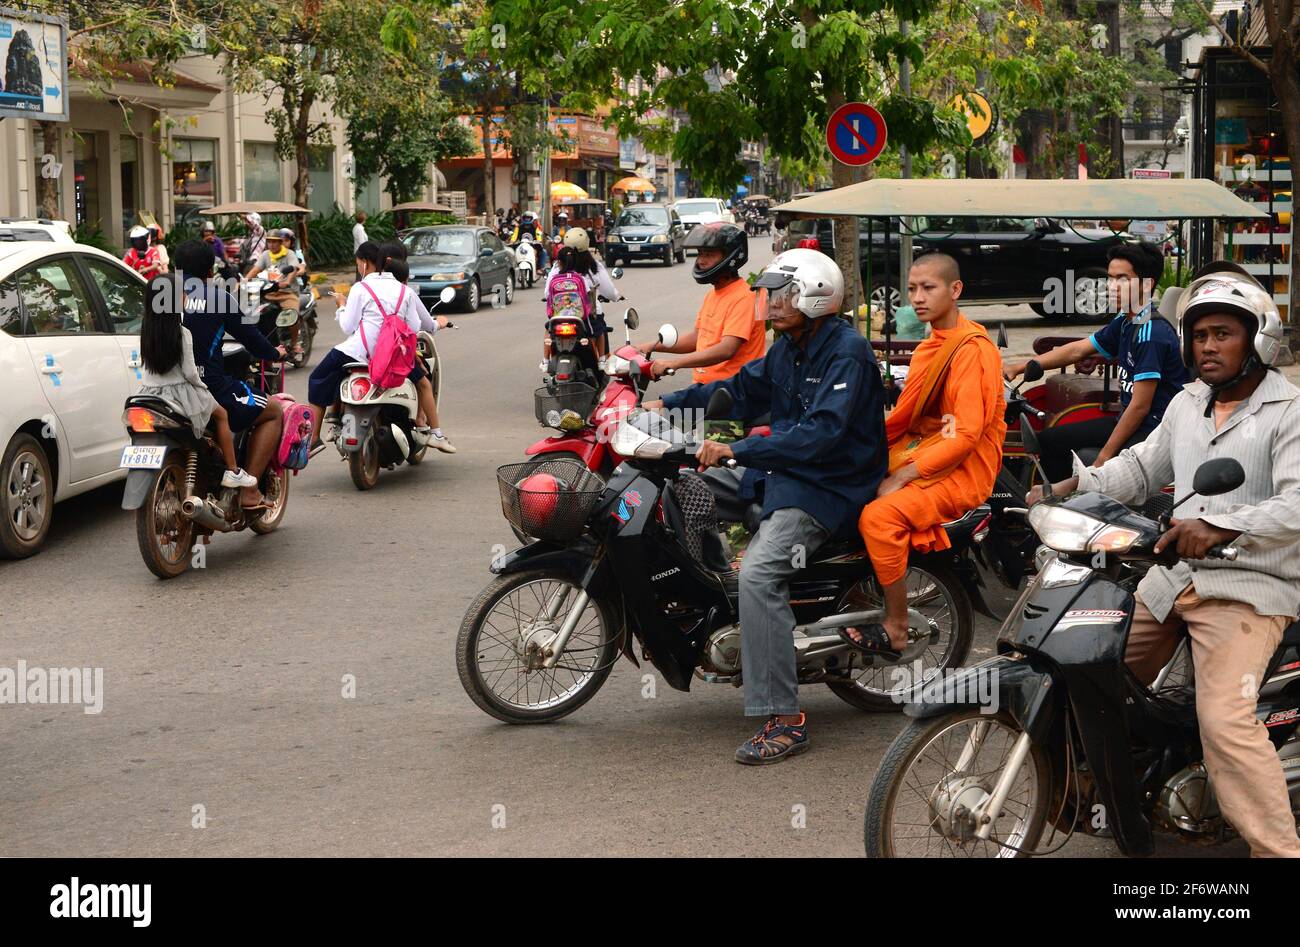 Siem Reap city. Street with cars, motorcycles and auto rickshaw or tuk-tuk. Cambodia. Stock Photo